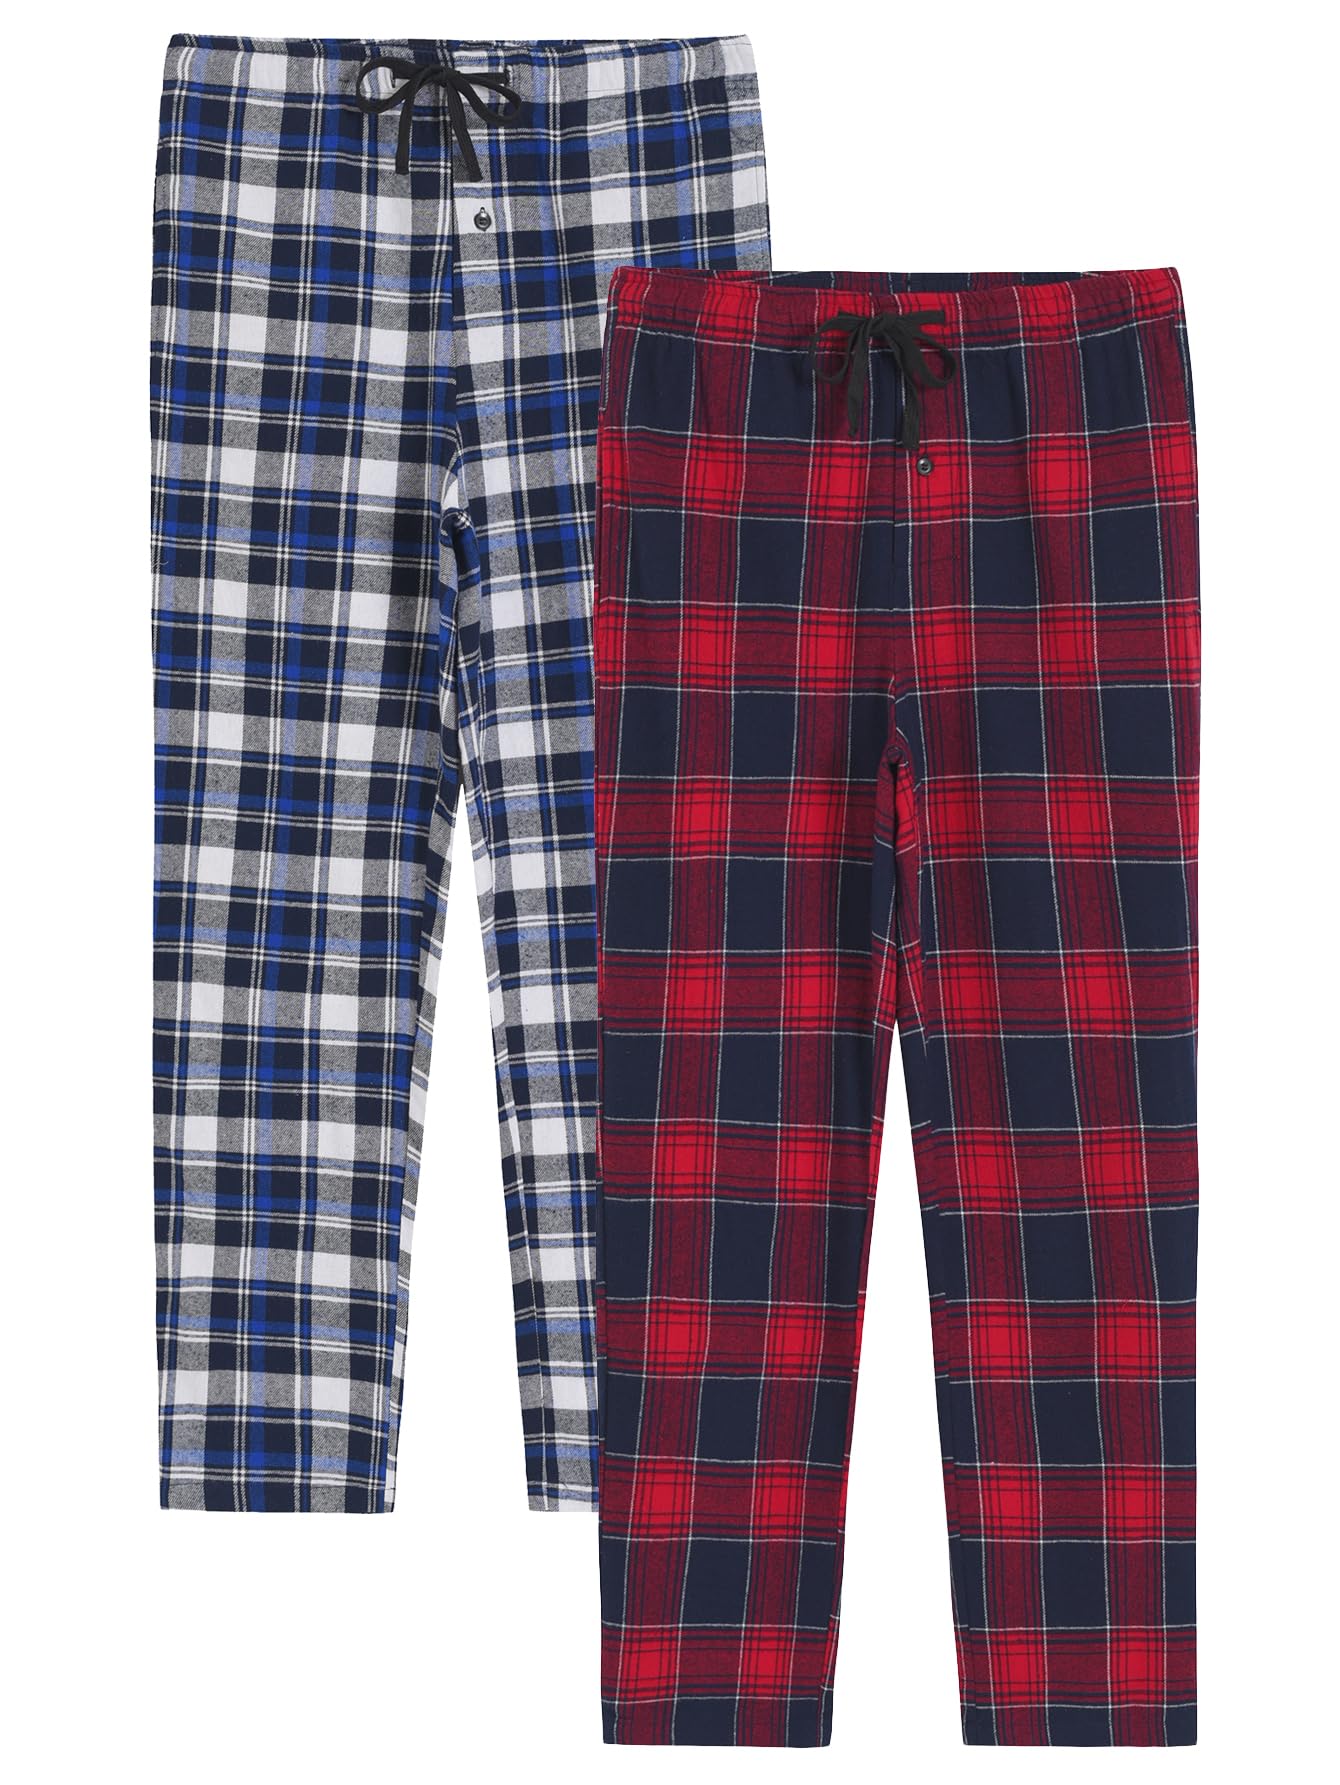 Men's Flannel Pajama Pants Cotton Lounge Pants with Pockets - Latuza